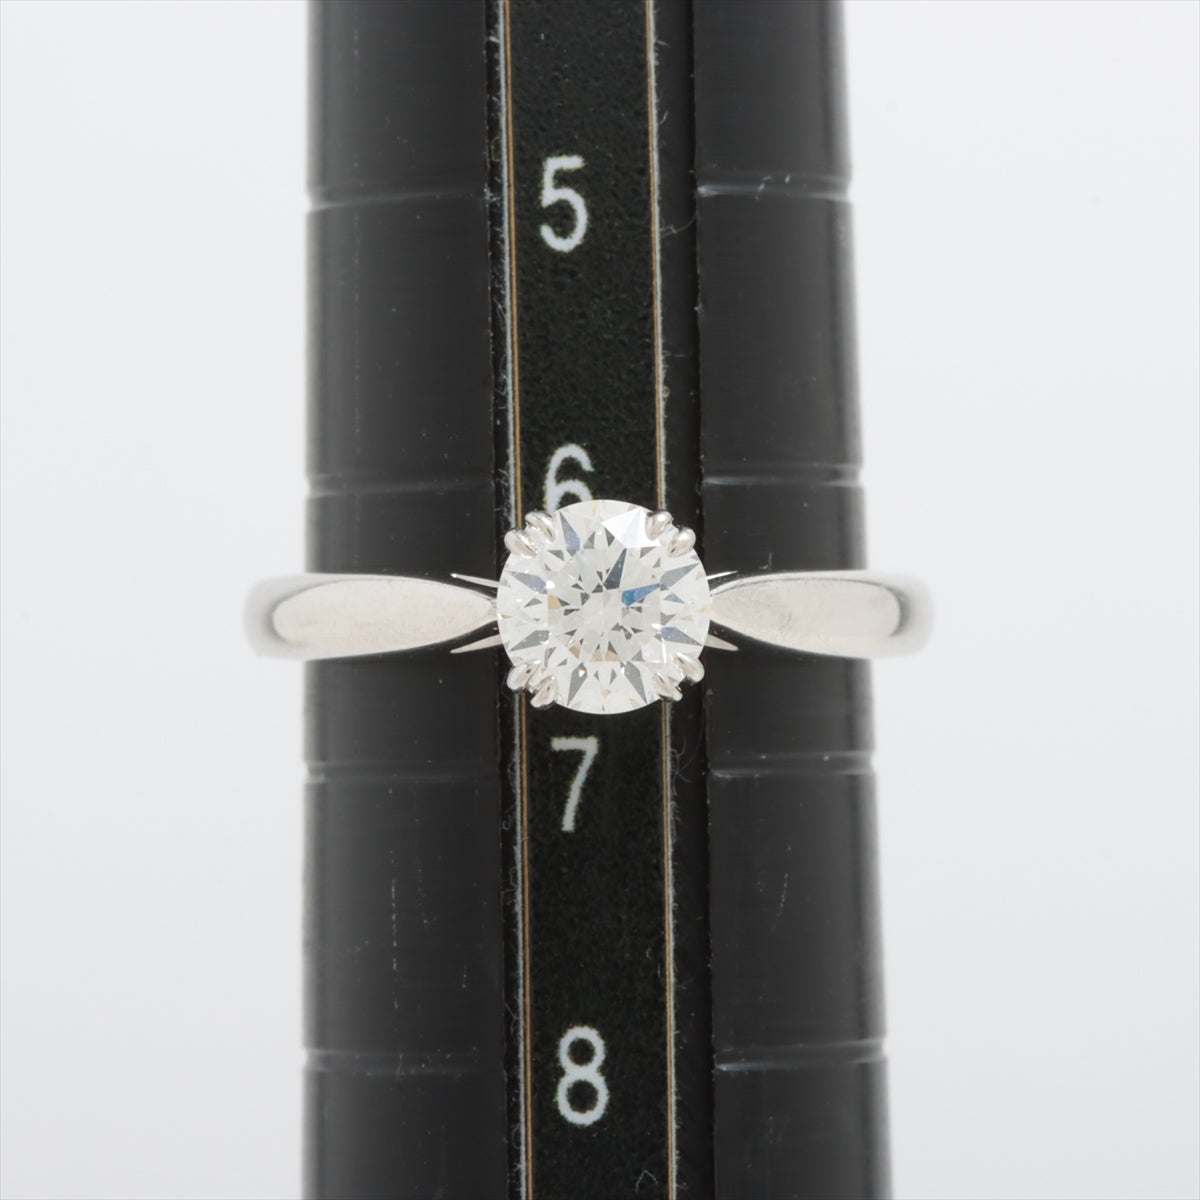 Harry Winston Solitaire Diamond Ring Pt950 3.6g 0.55 F VS1 3EX NONE RGDPRD005NSS